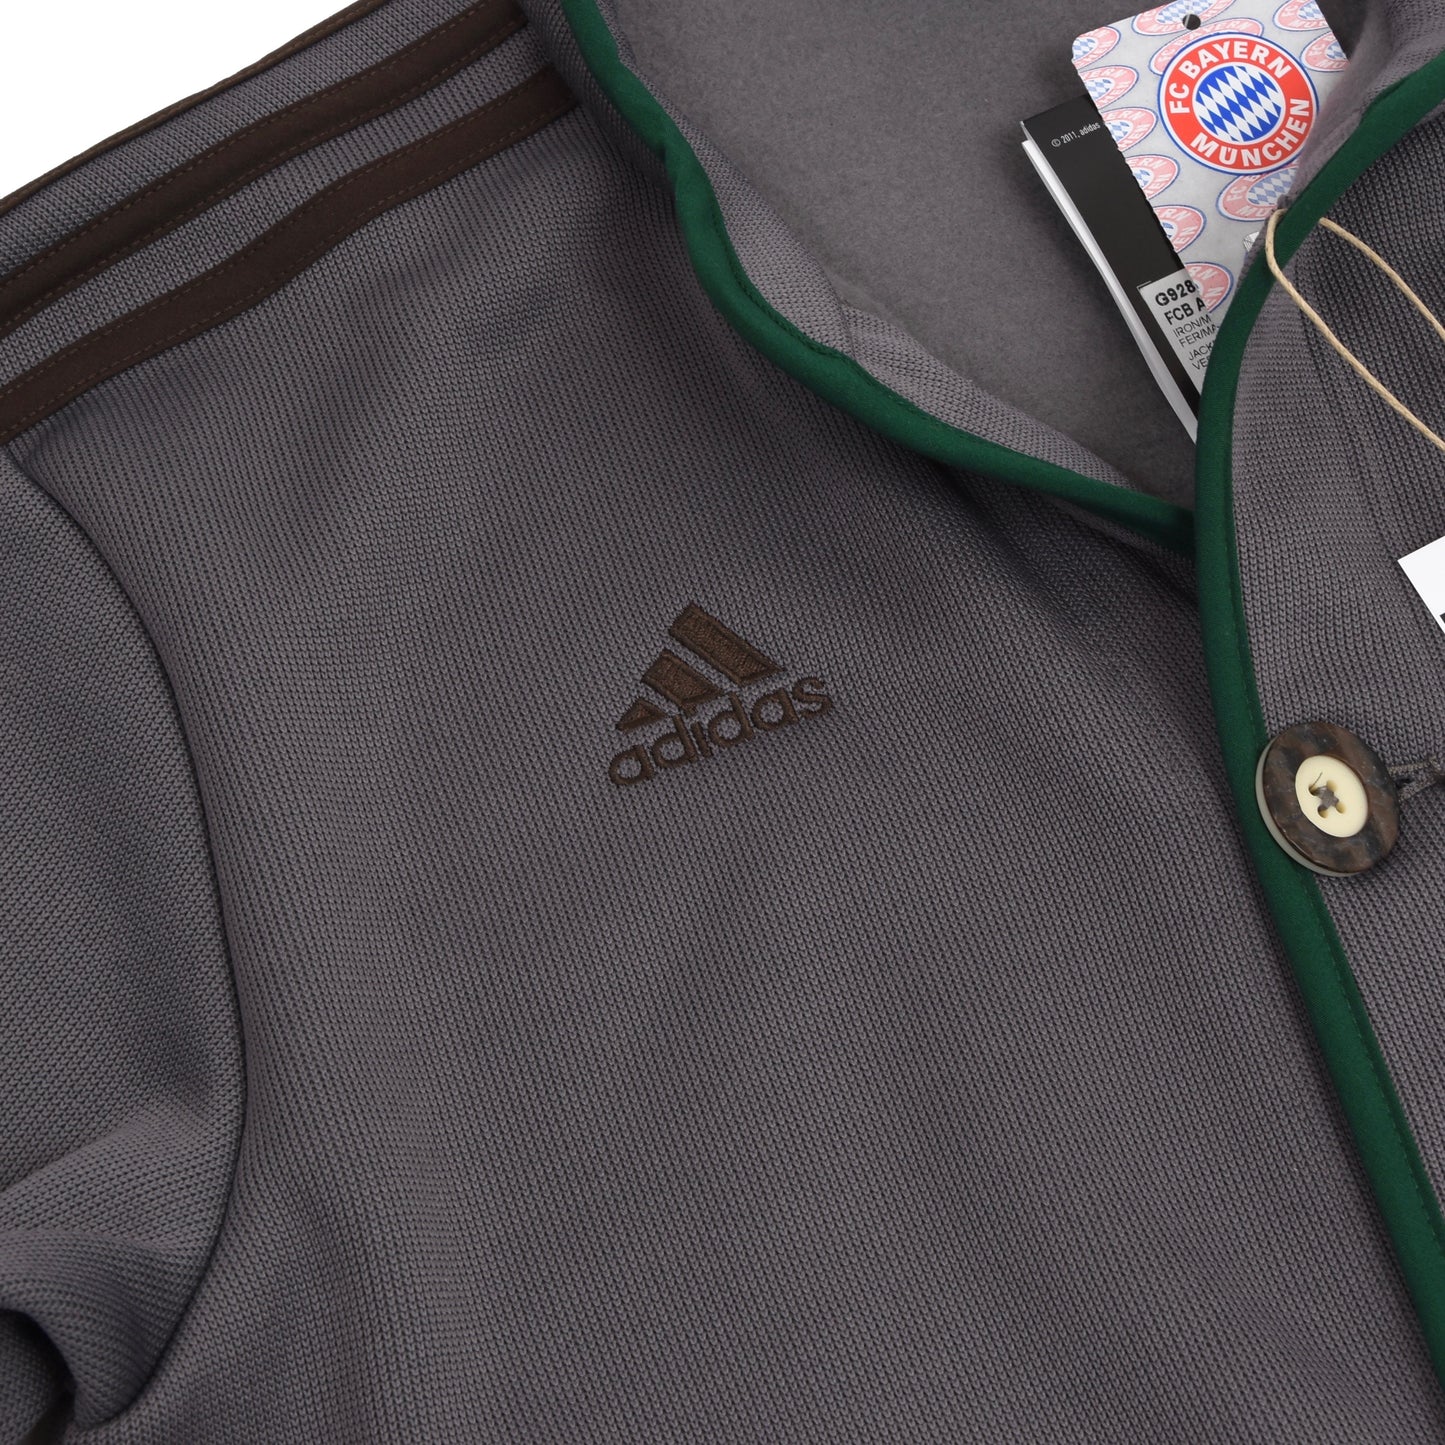 NEW FC Bayern München x Adidas Janker/Jacket Size M - Grey